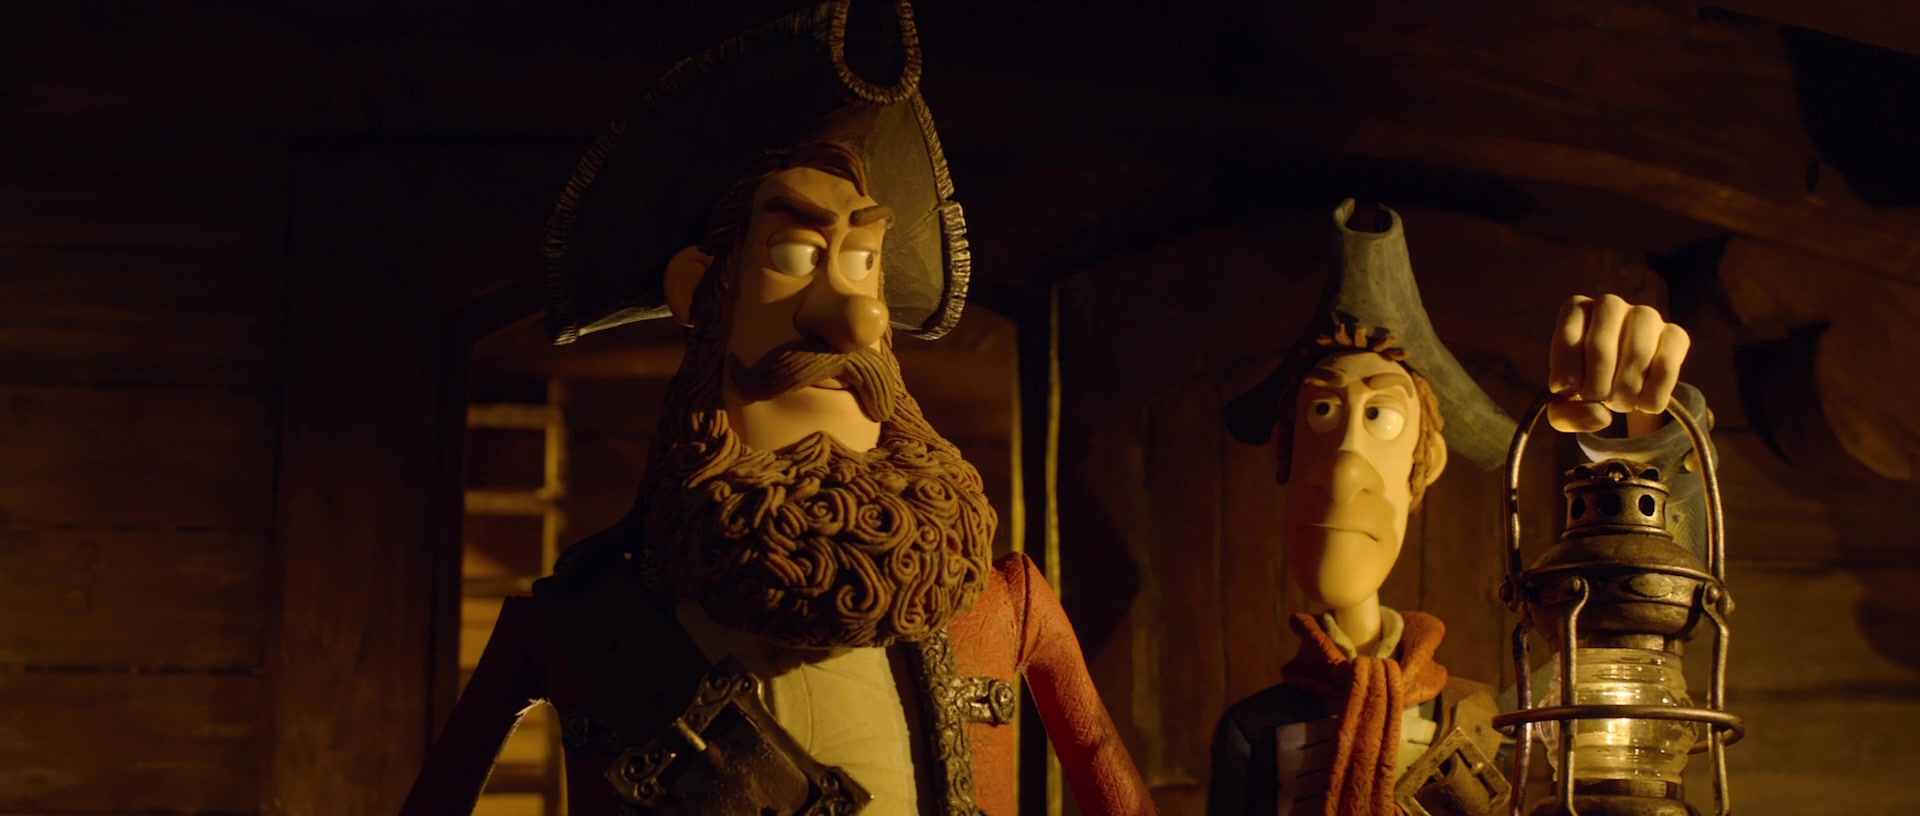 The Pirates! Band of Misfits (2012) Screencap | Fancaps